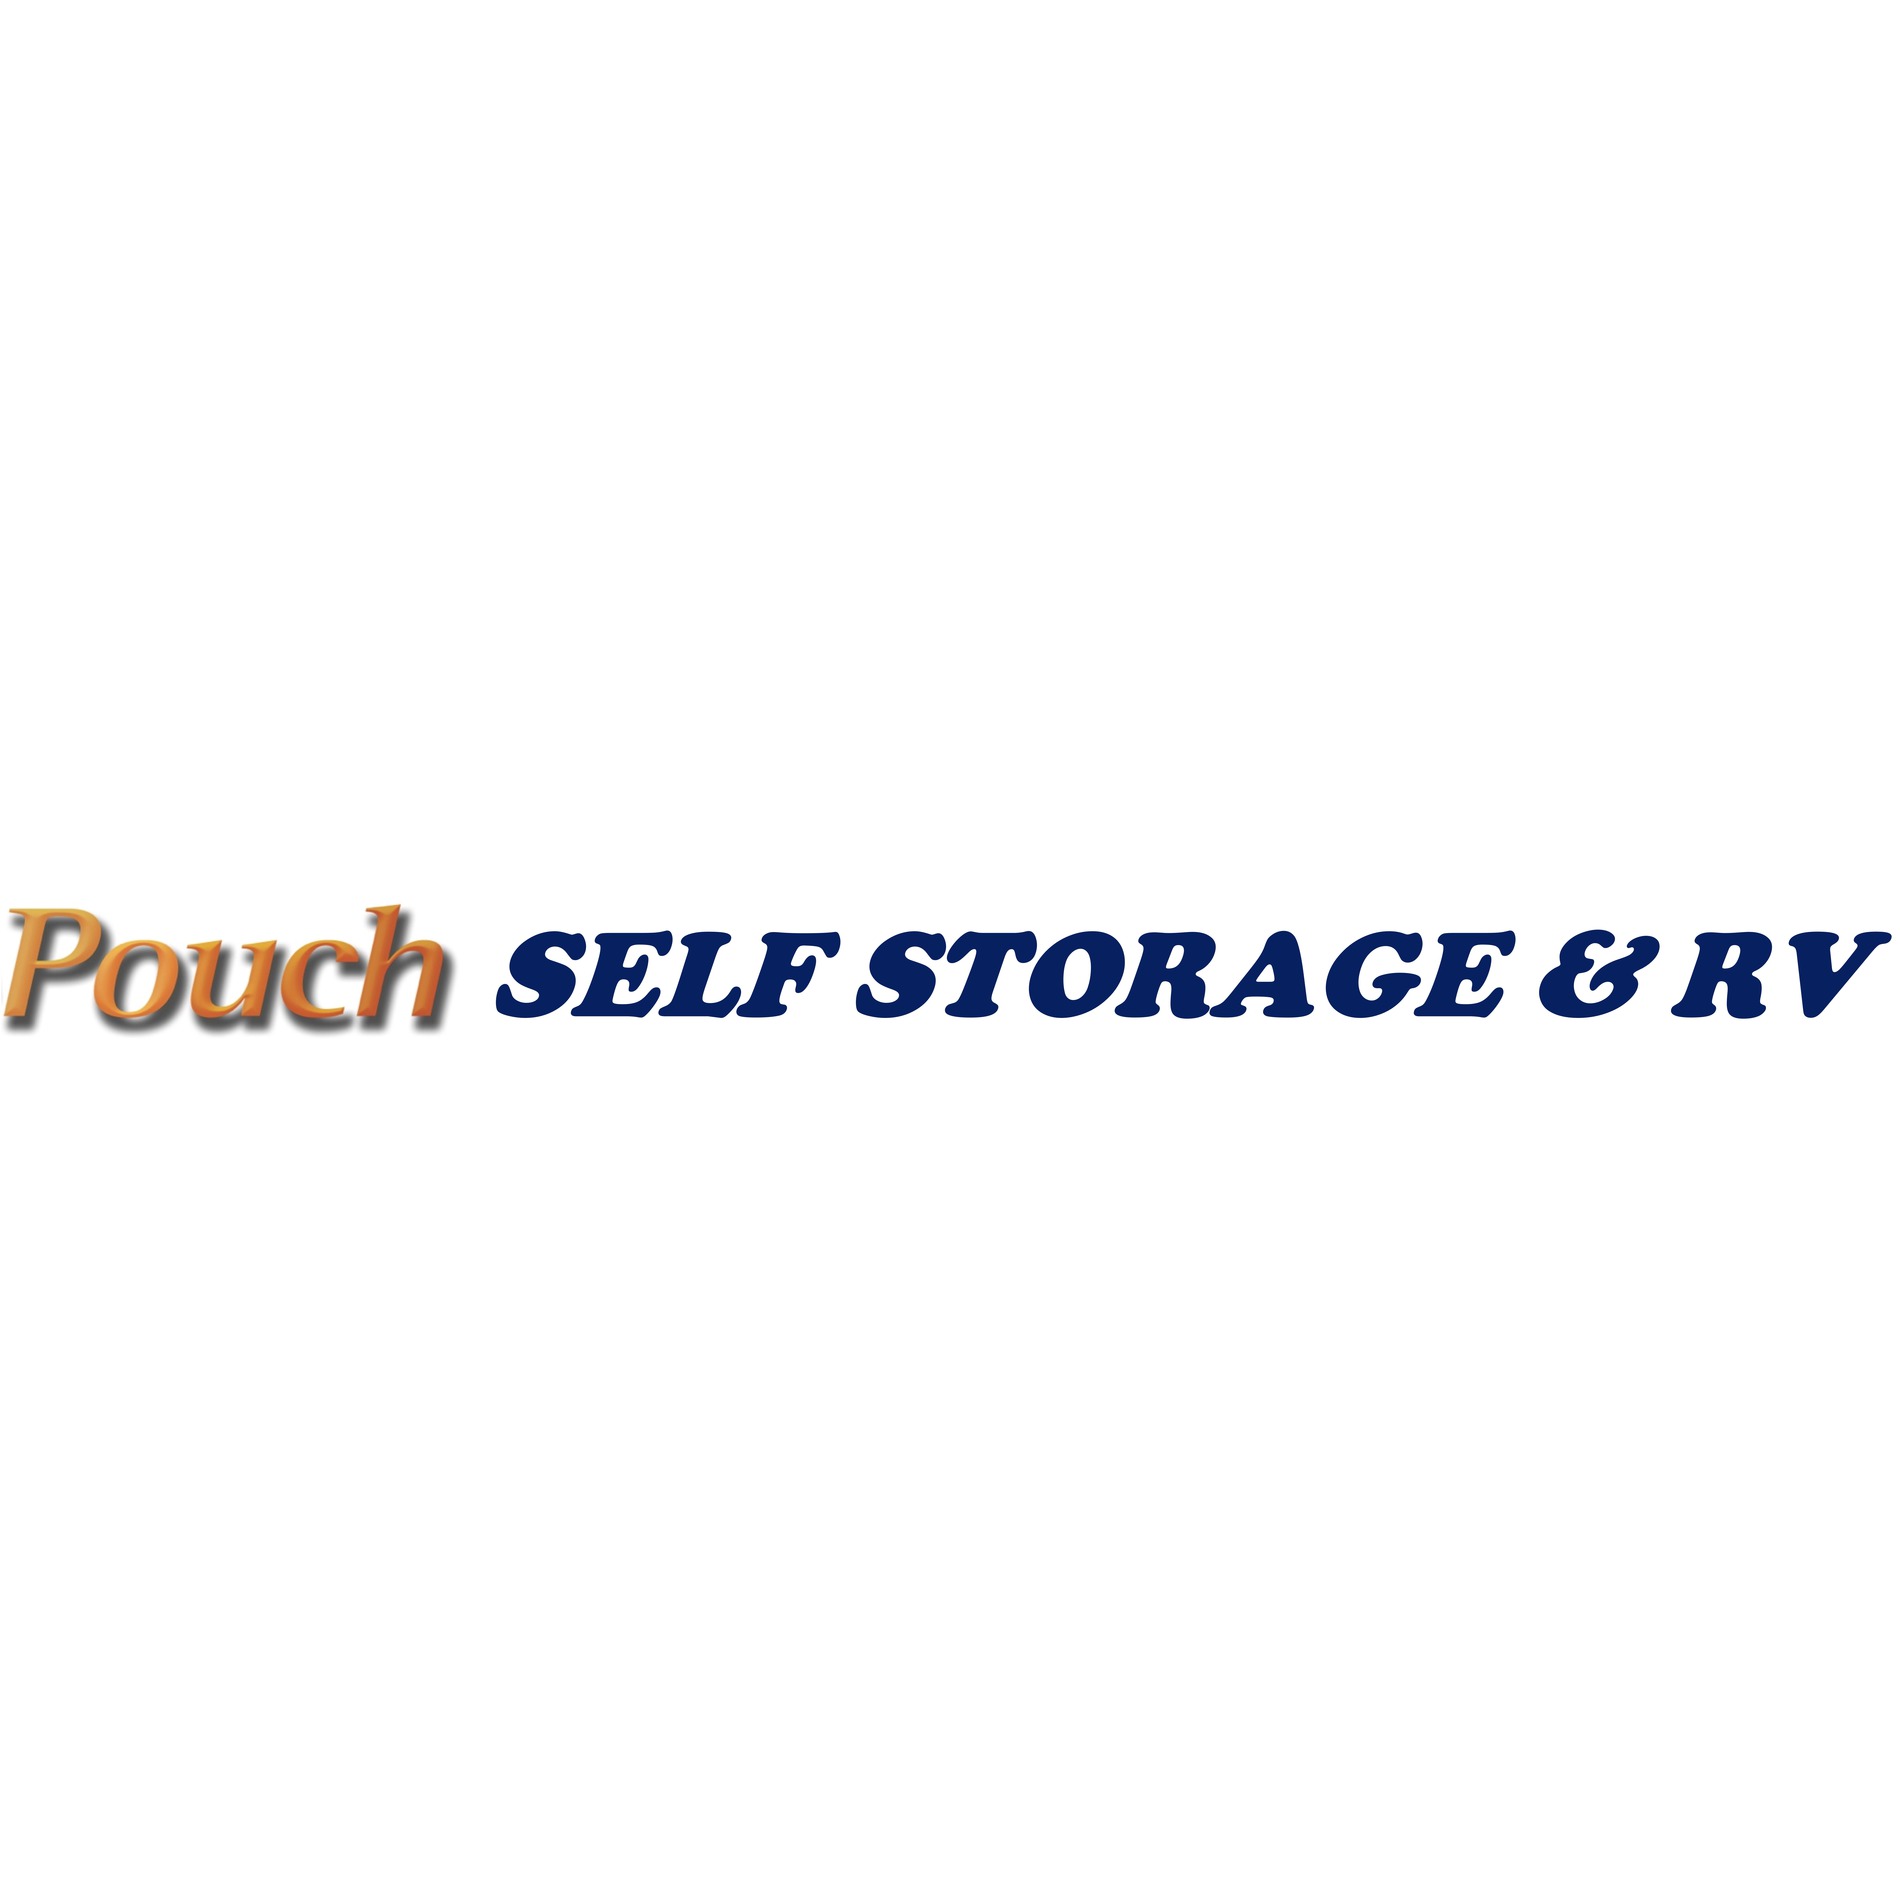 Victoria Self Storage & RV Center Logo